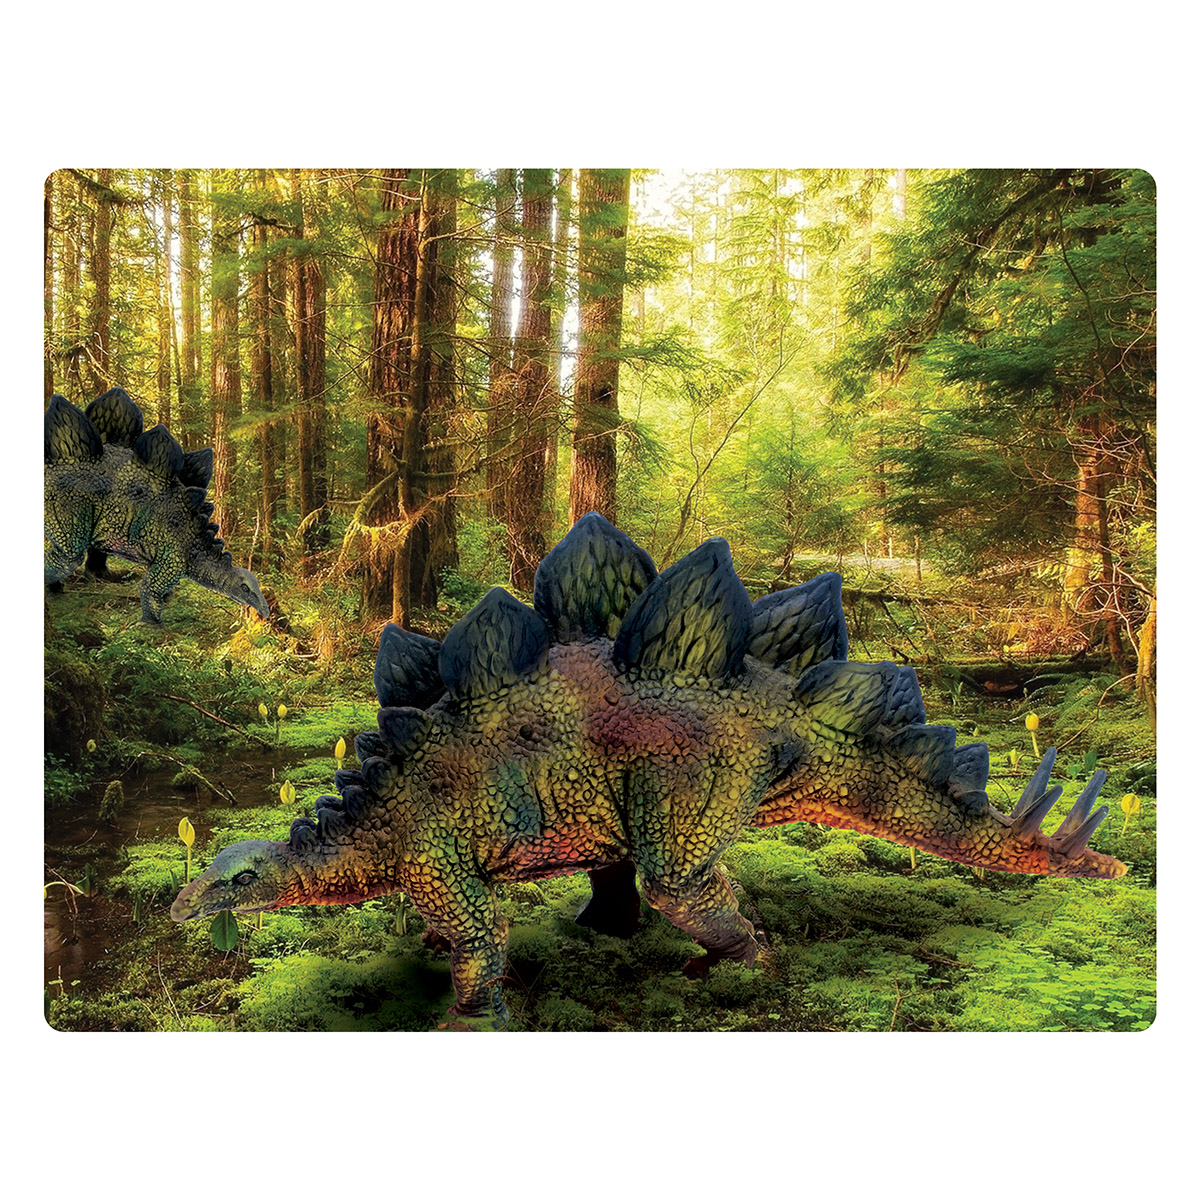 Stegosaurus Dinosaurs Jigsaw Puzzle